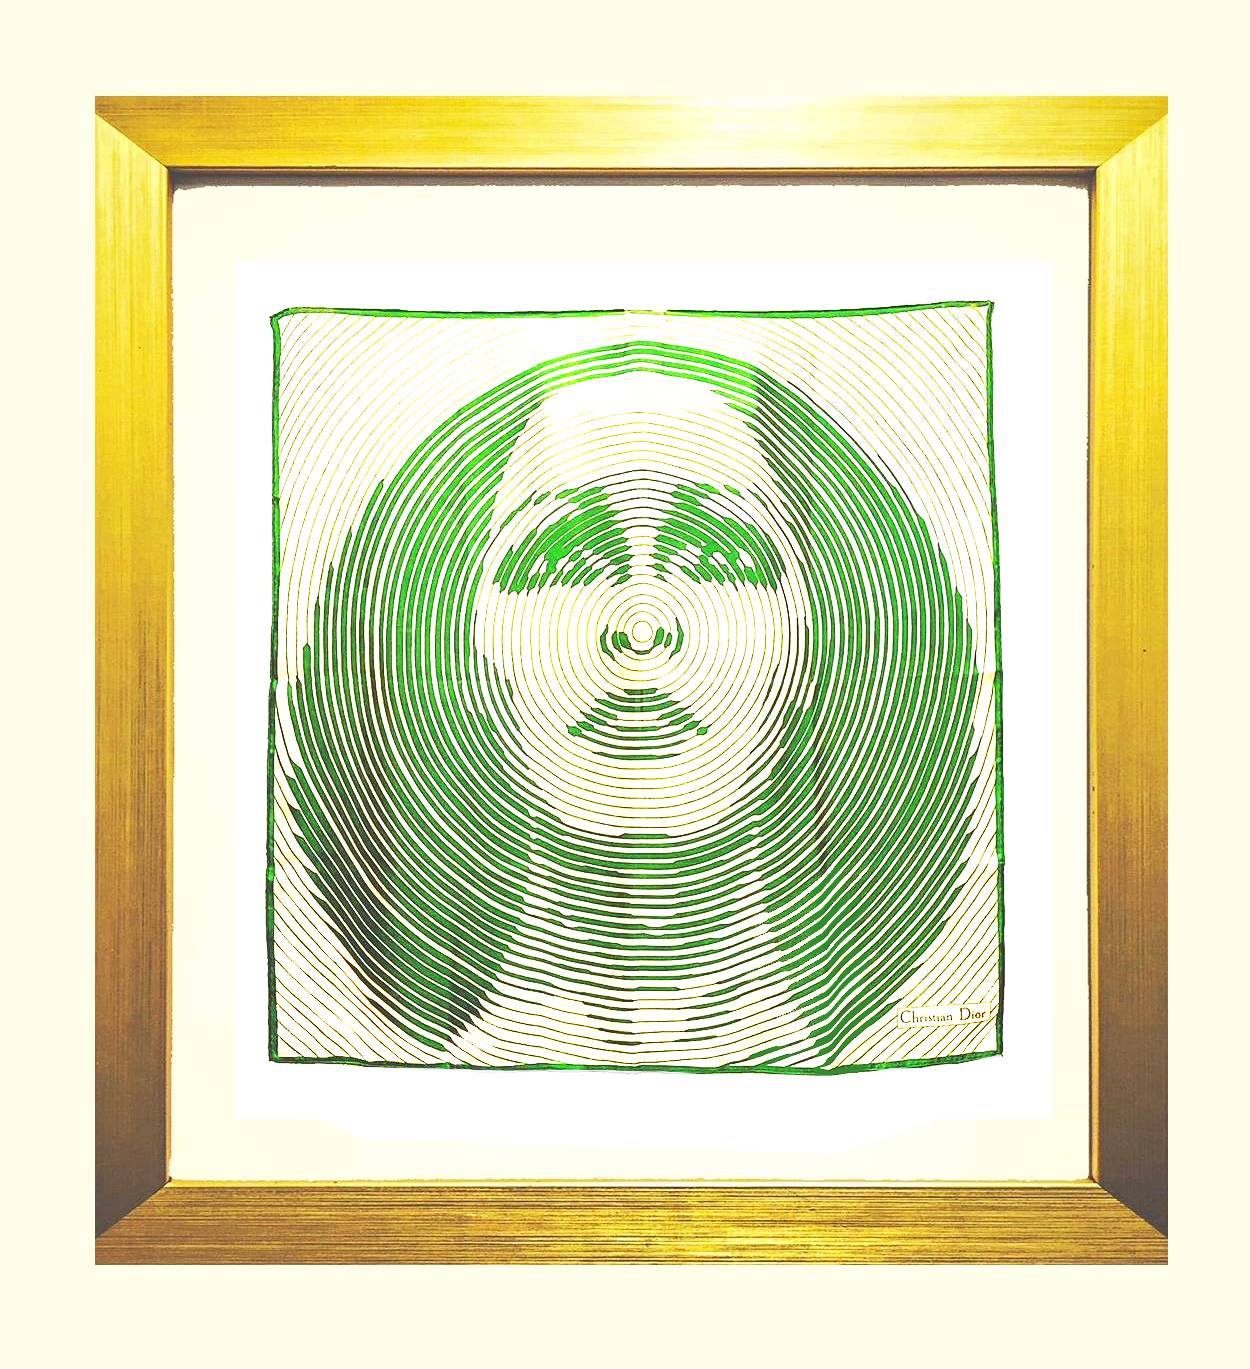 1970s CHRISTIAN DIOR GREEN IVORY " DIVA PORTRAIT" PRINT SILK FRAMED SCARF - style - CHNGR